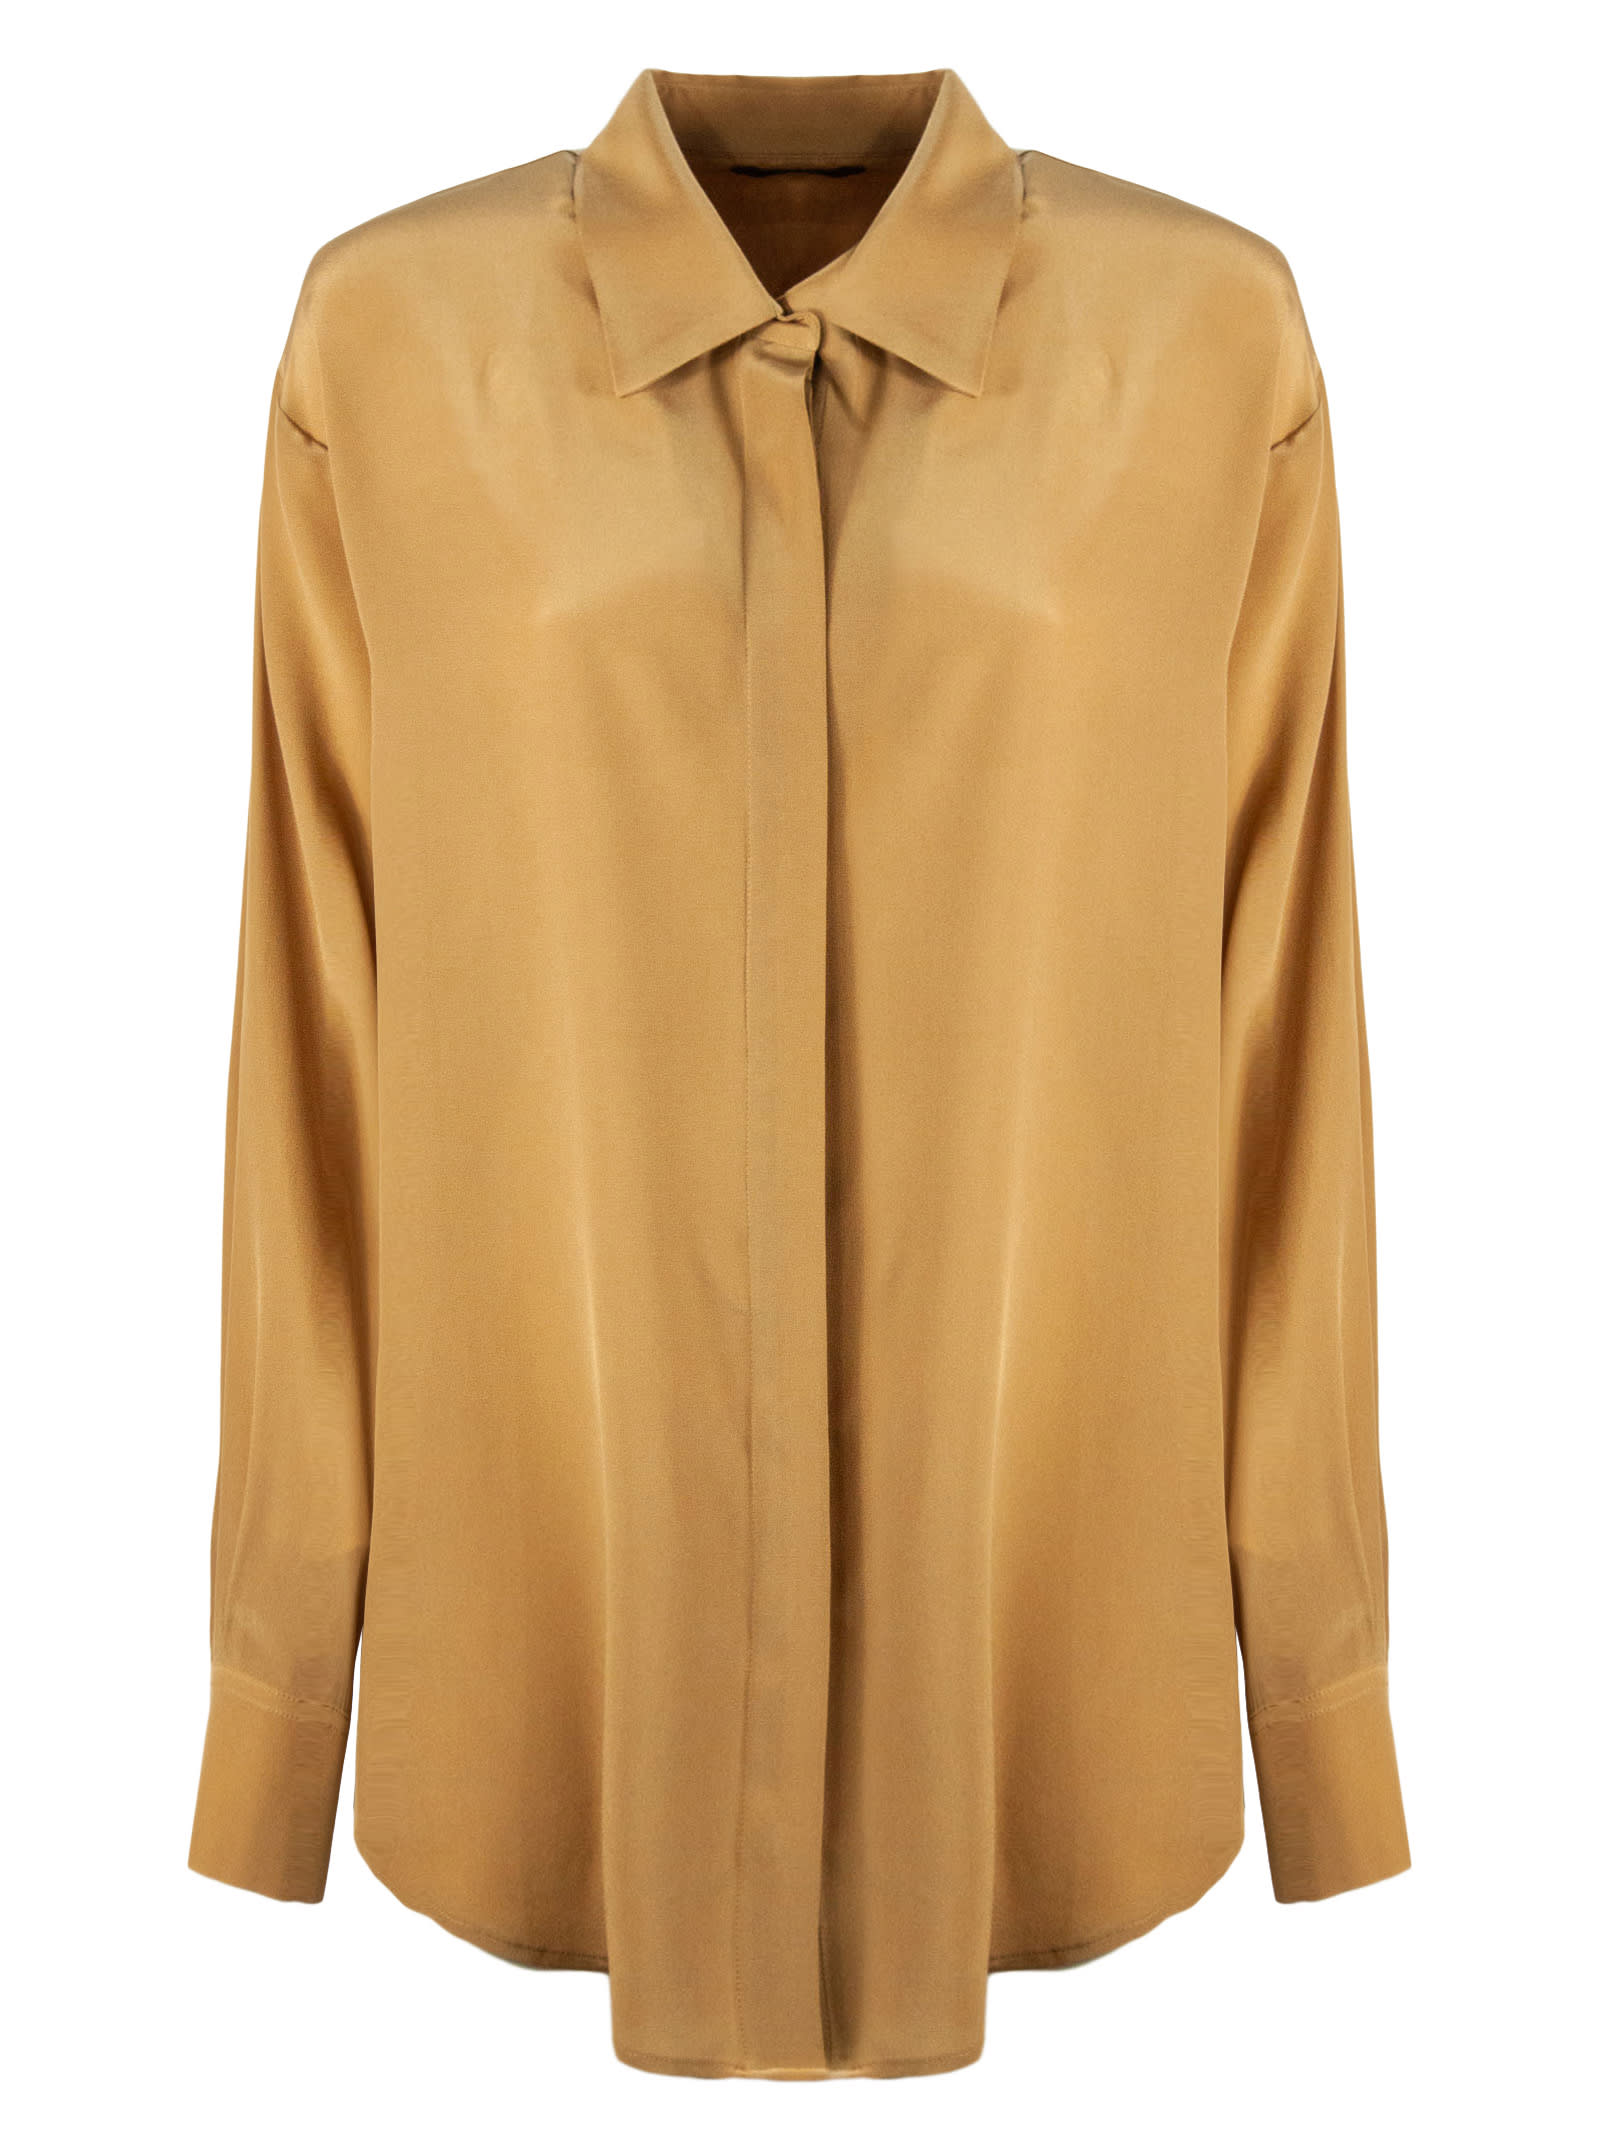 Federica Tosi Camel Silk Shirt